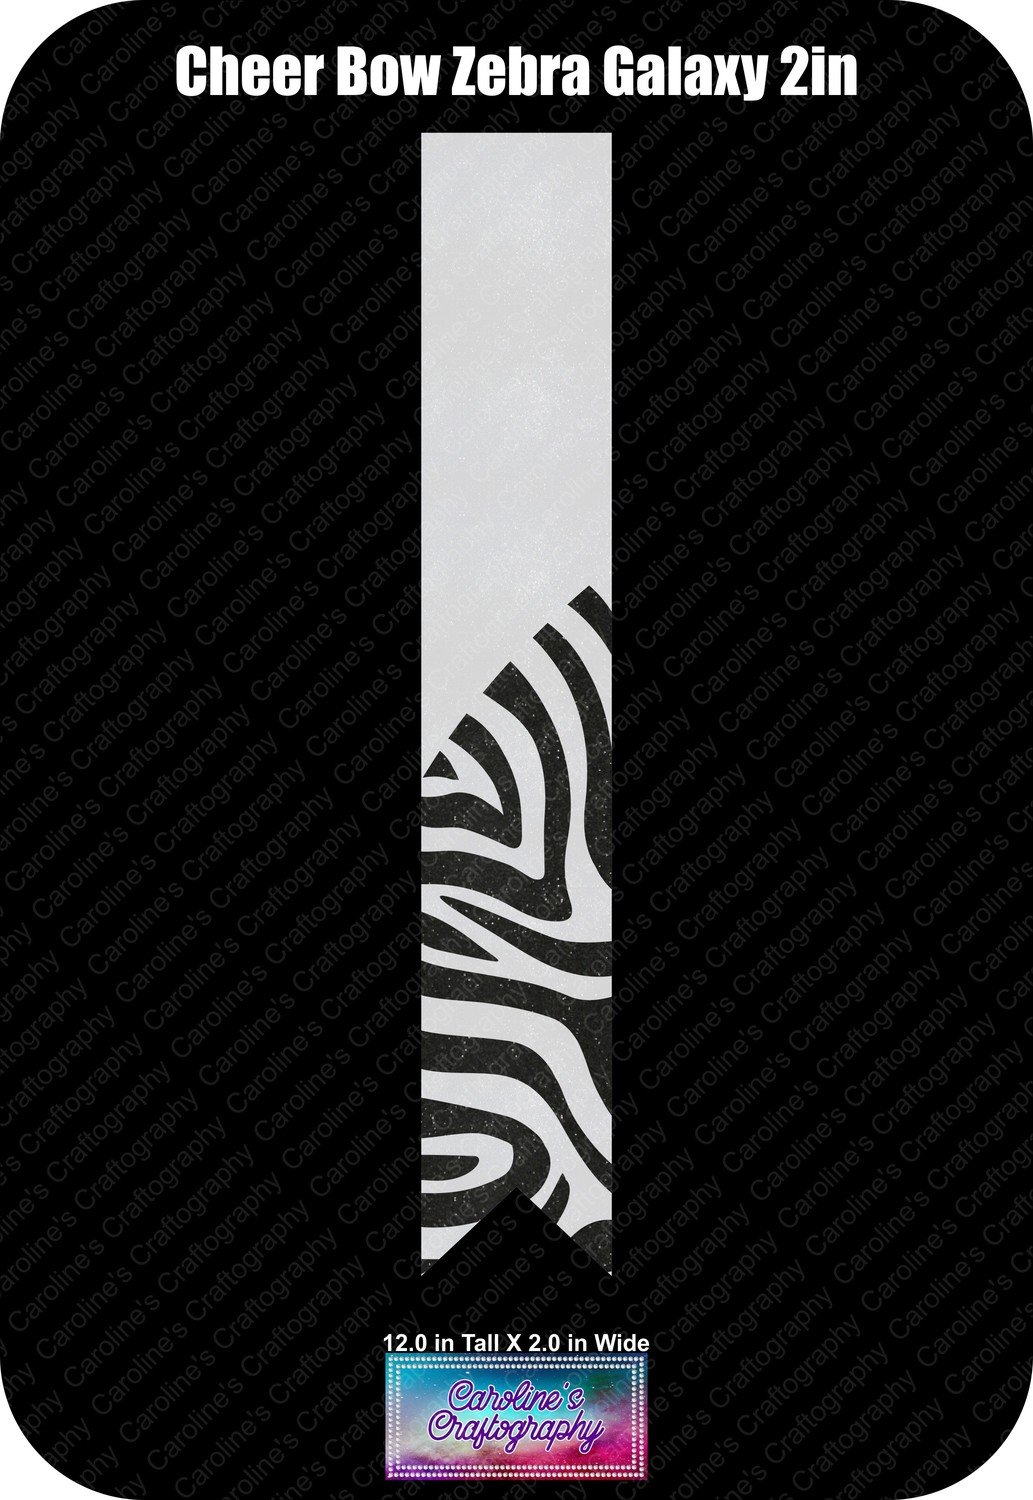 Zebra Galaxy 2in Cheer Bow Vinyl